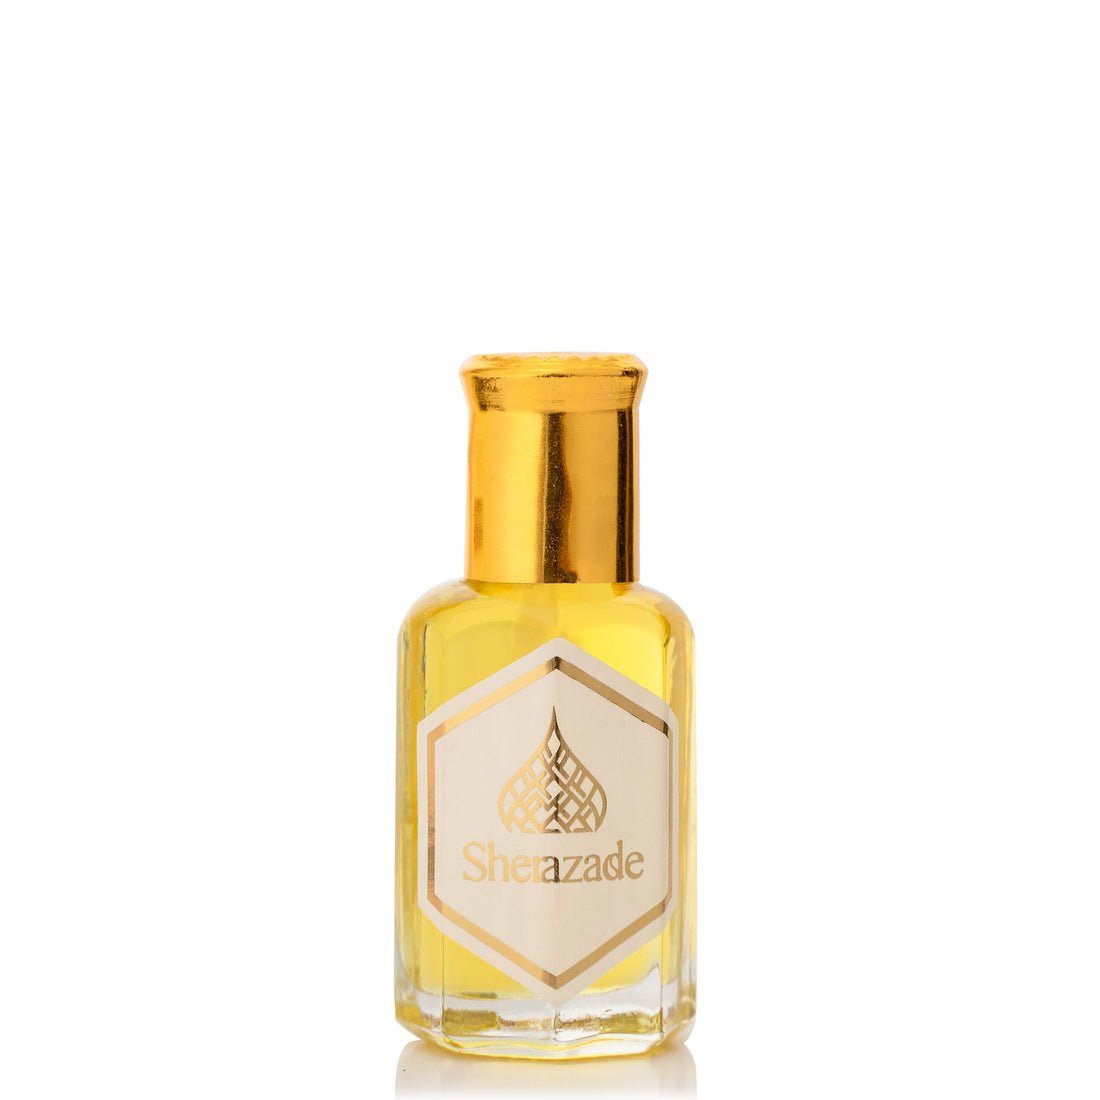 Royal golden amber purfume oil